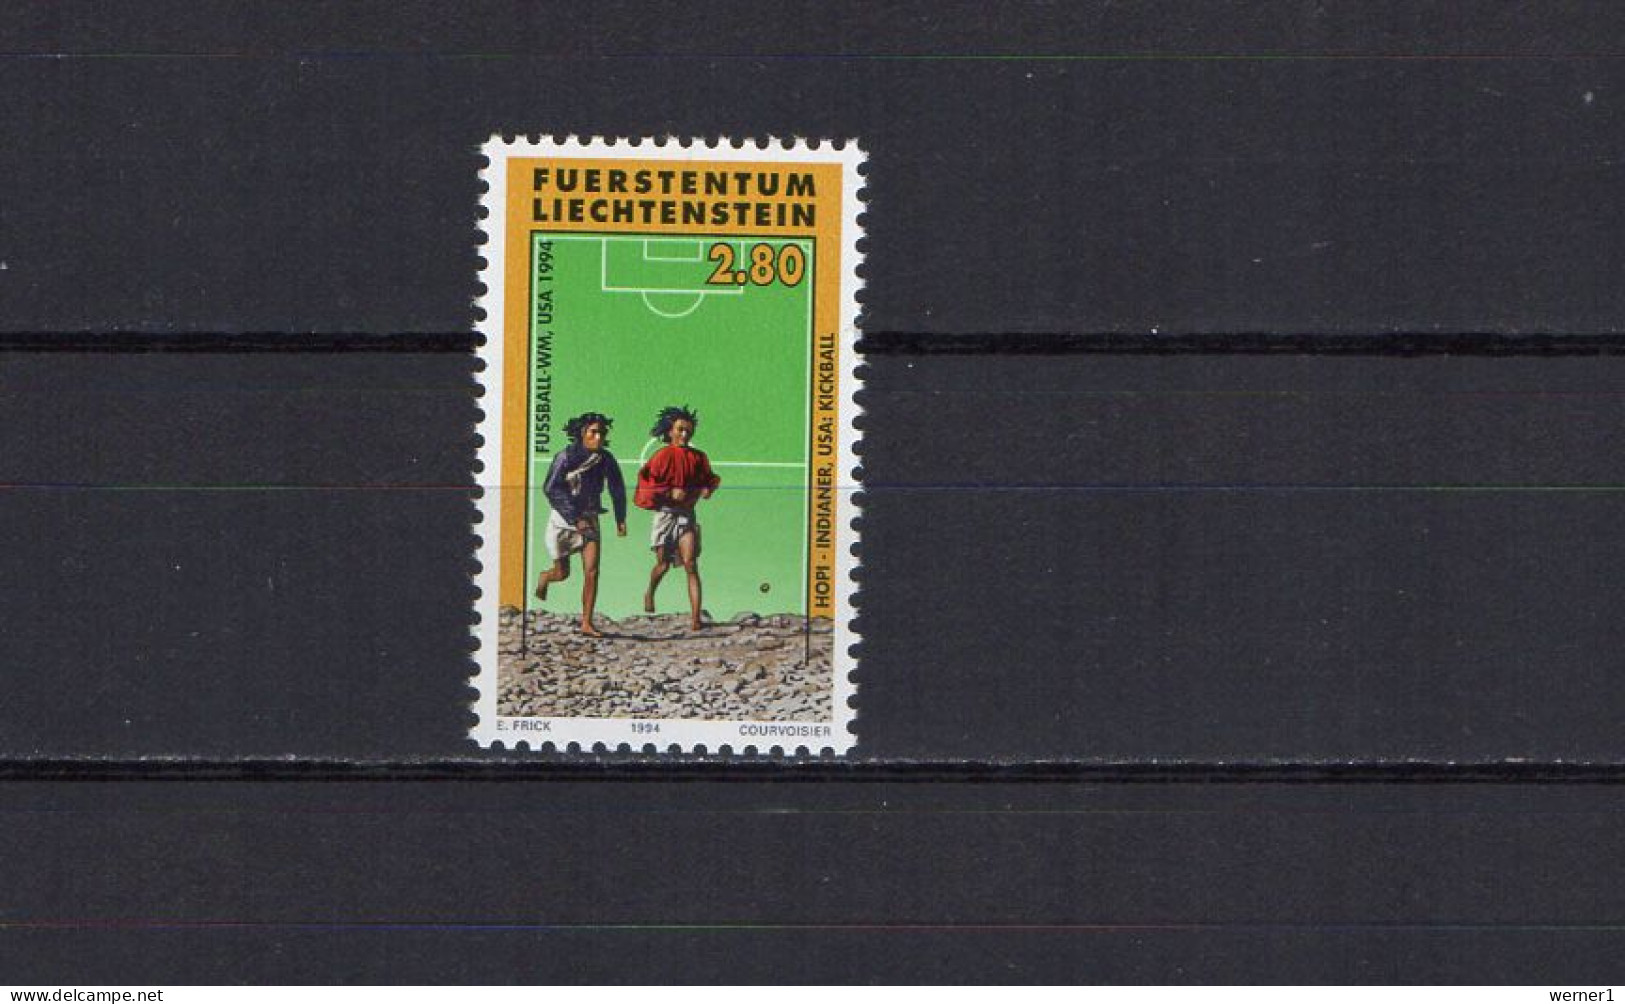 Liechtenstein 1994 Football Soccer World Cup Stamp MNH - 1994 – Vereinigte Staaten